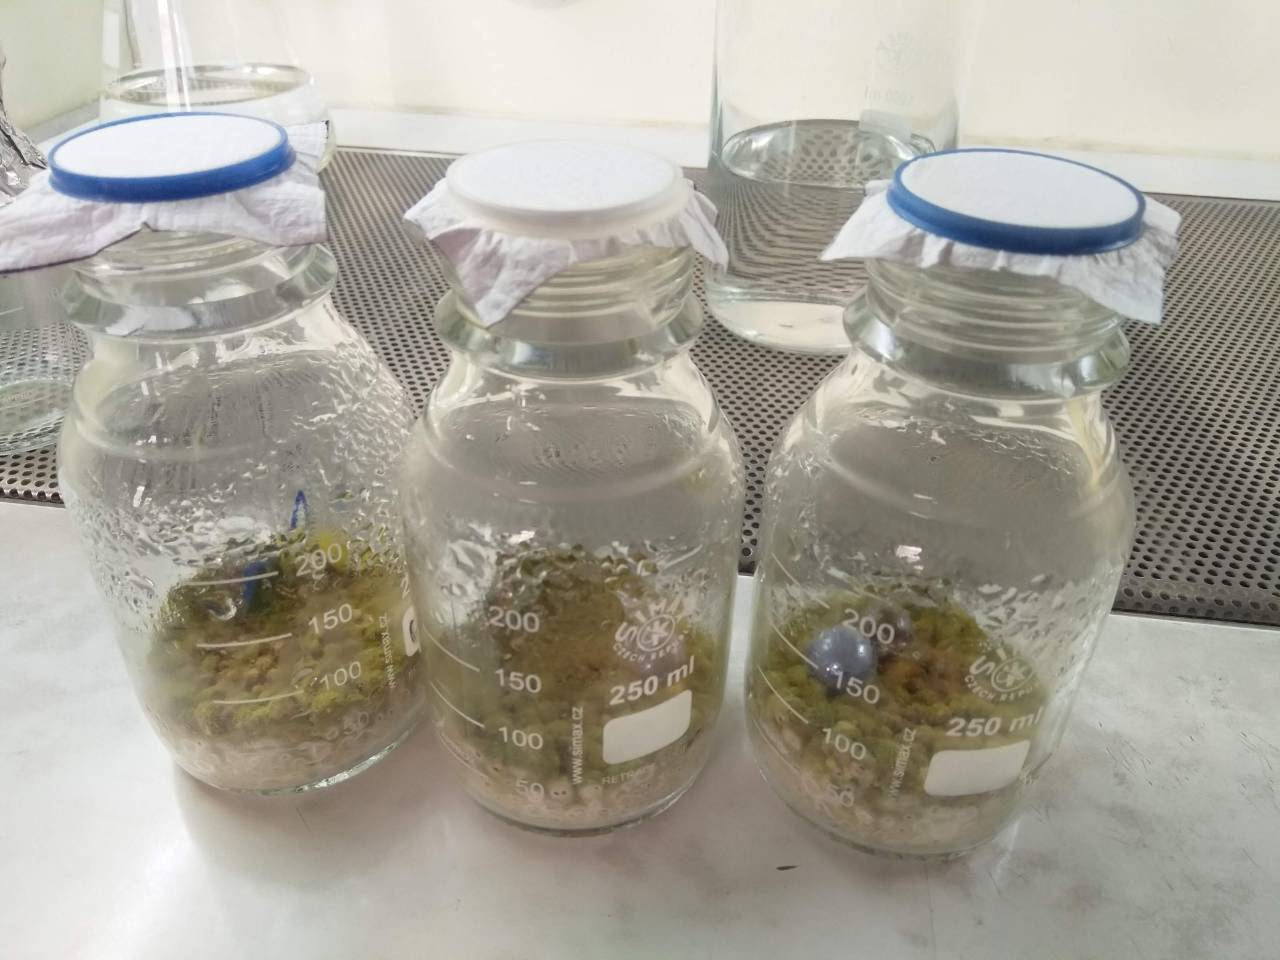 4 growth of bioagens on sorghum seeds